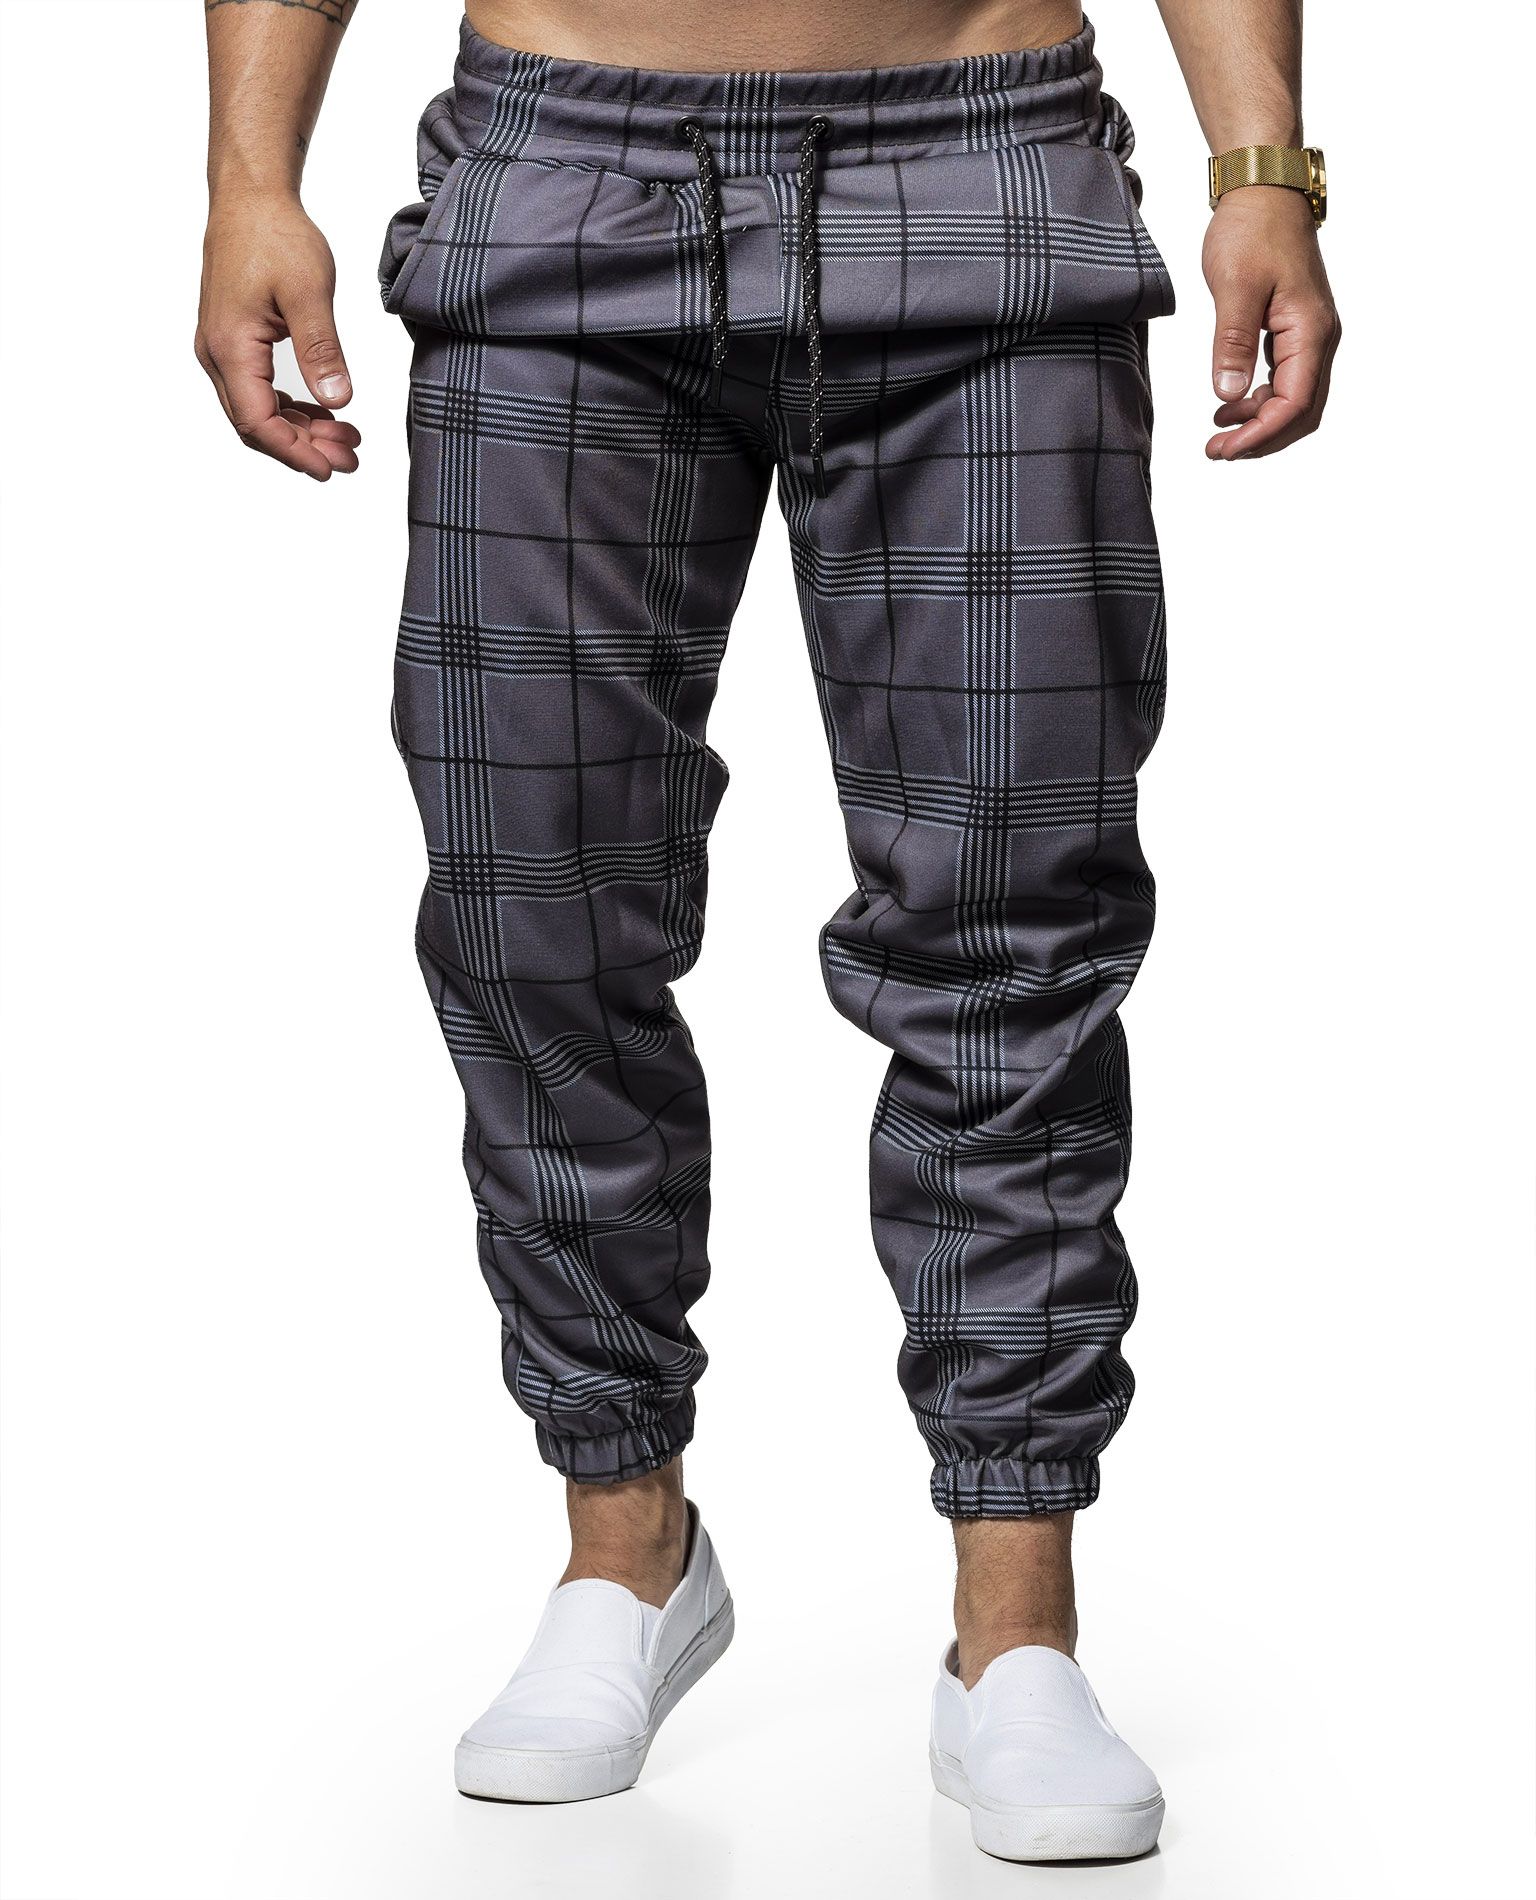 Square Pants Gray Jerone - 1228 - Trousers - Jerone.com